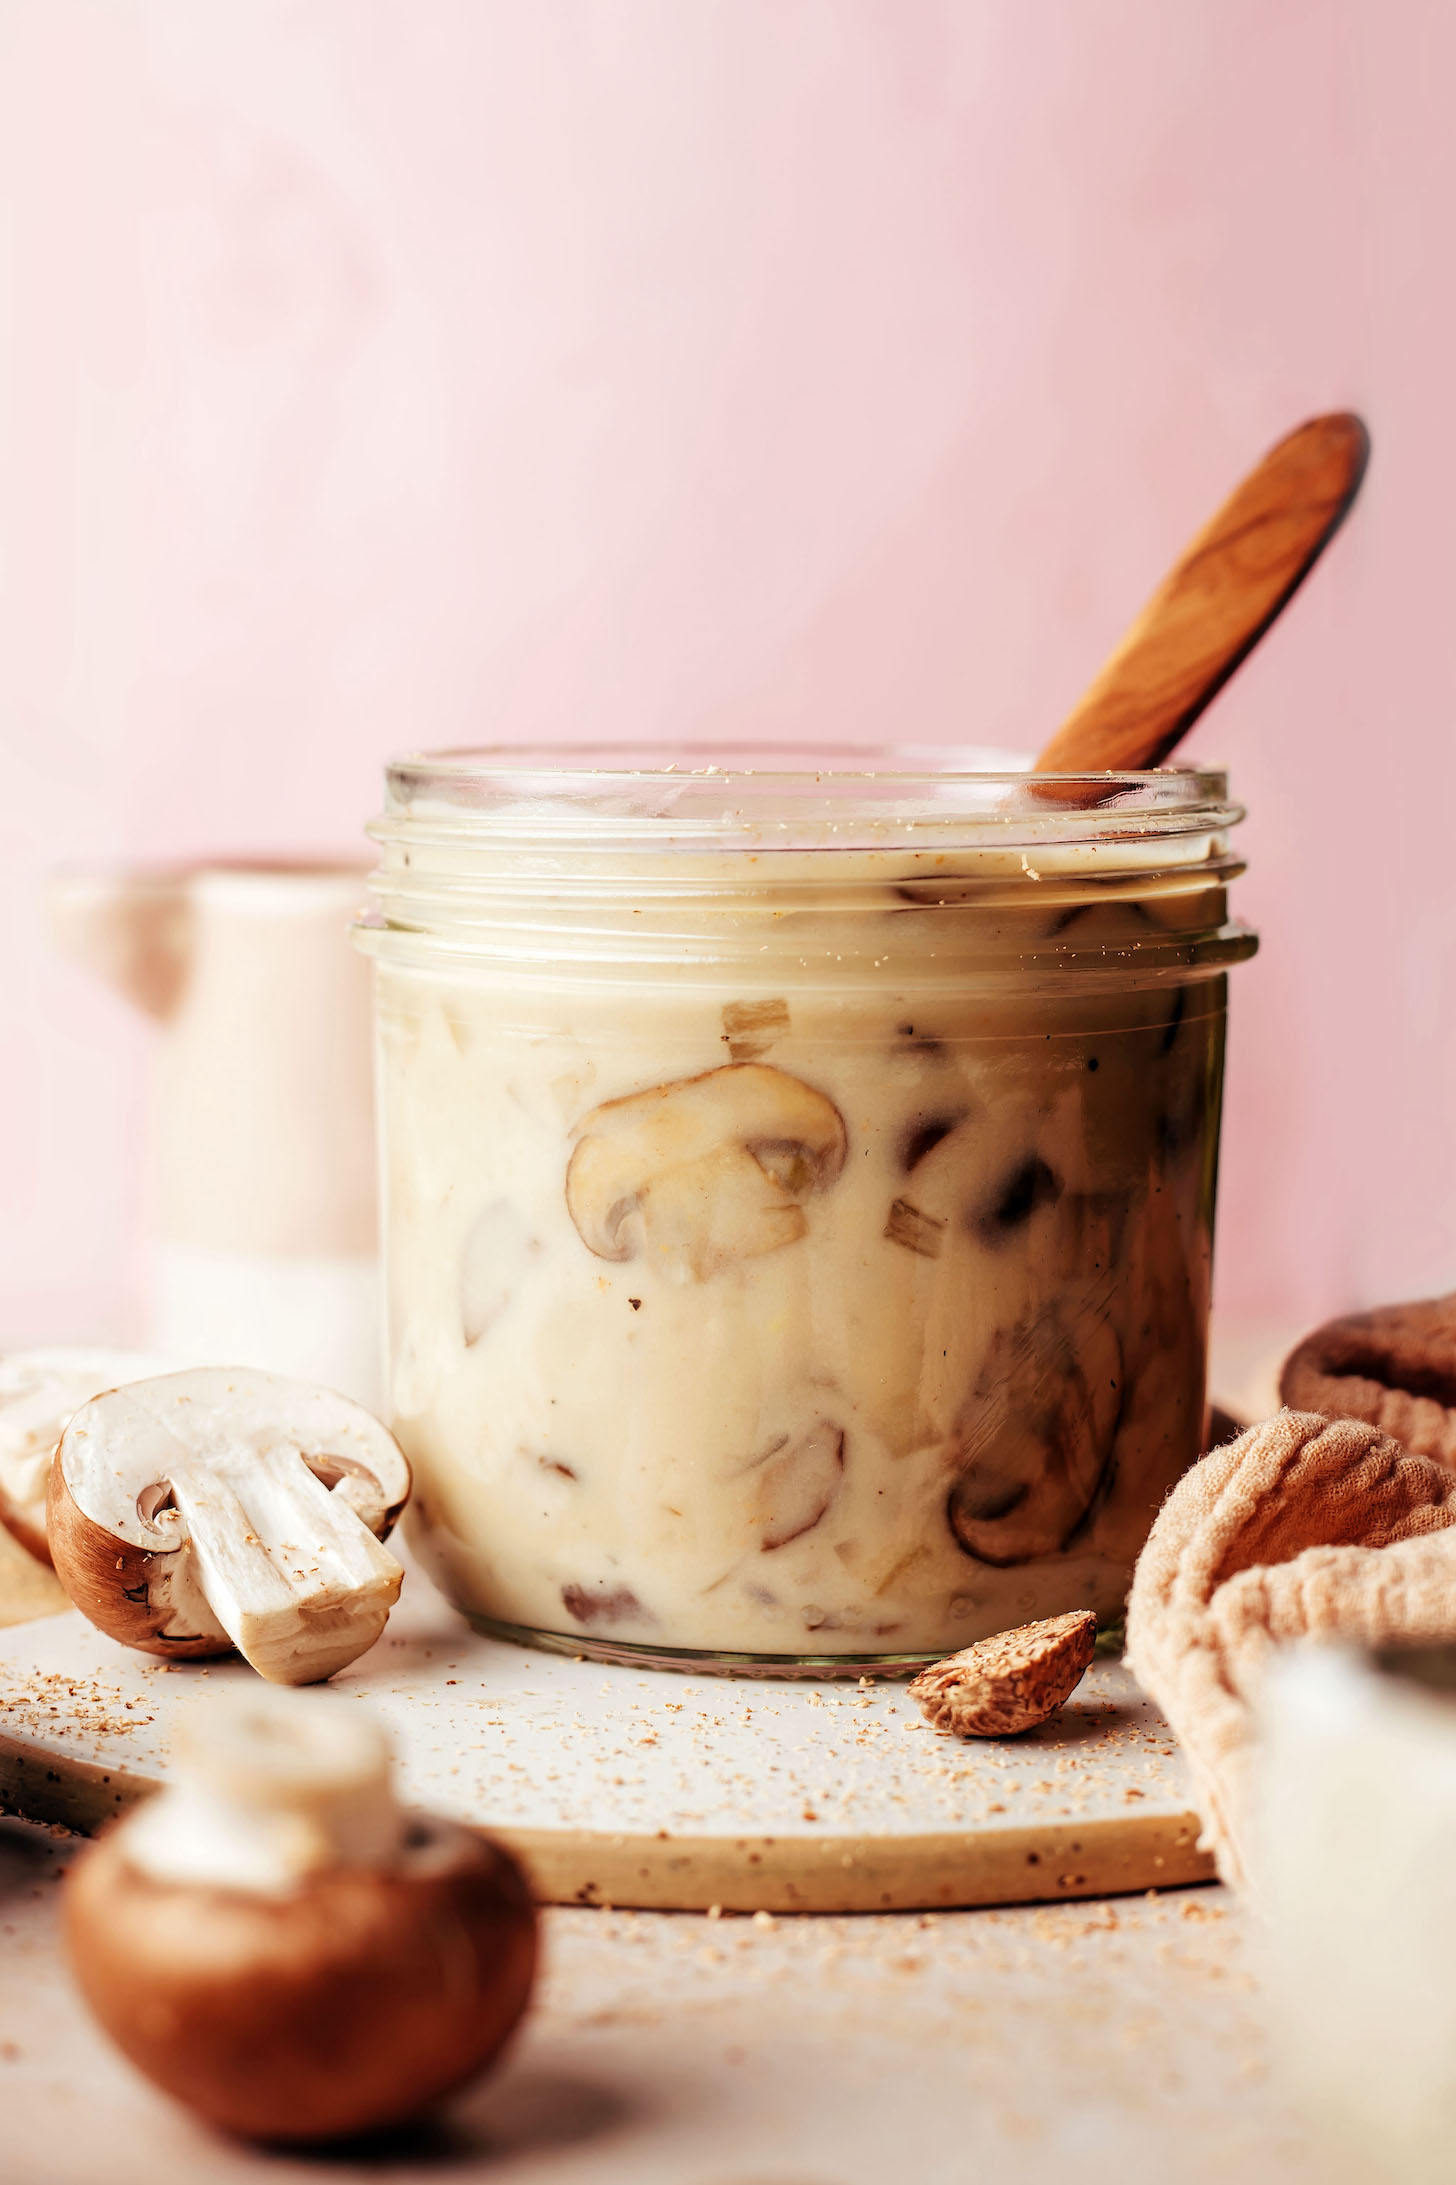 Small wooden spoon in a jar of homemade vegan gluten-free cream of mushroom soup